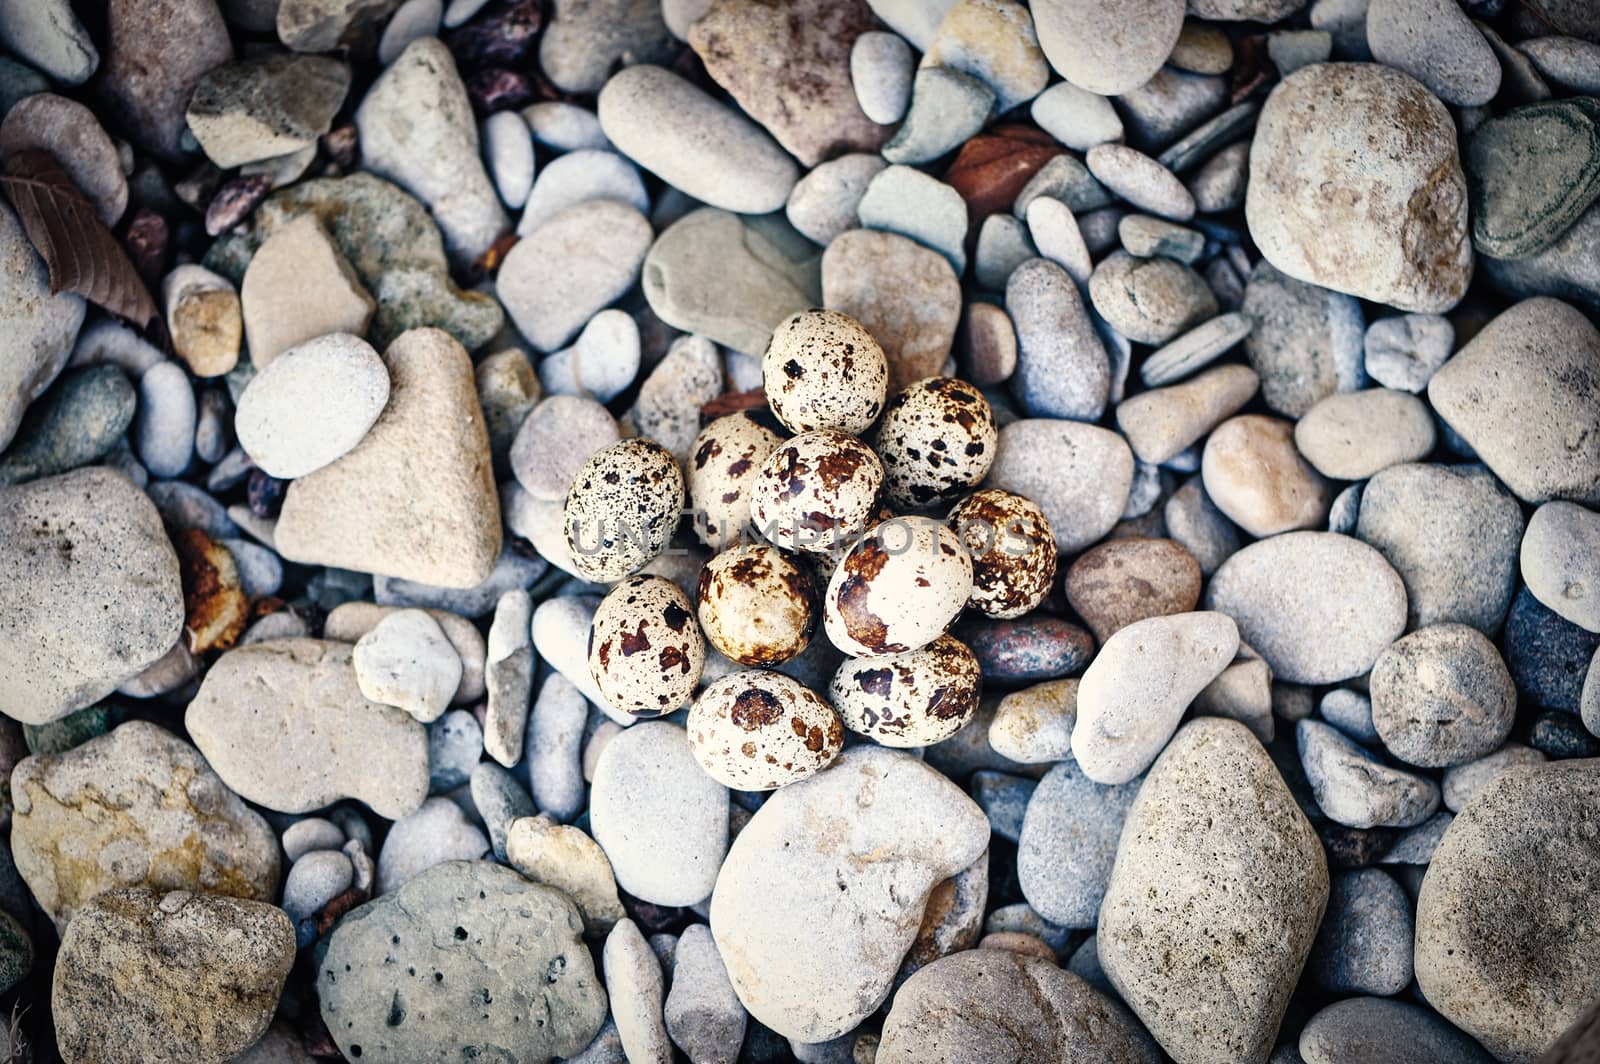 Group of quail eggs on the sea pebbles